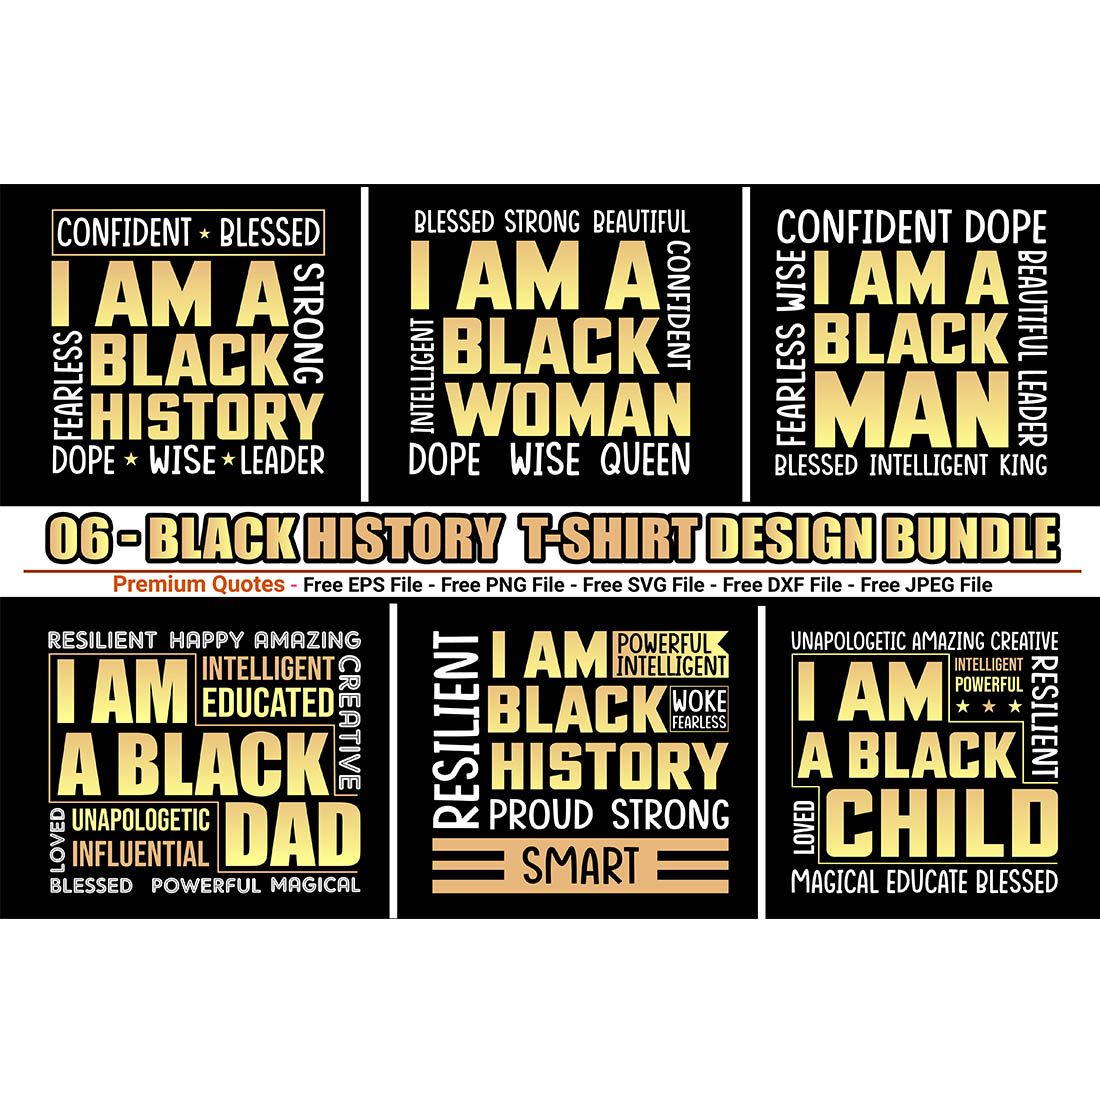 Black history t-shirt design bundle preview image.